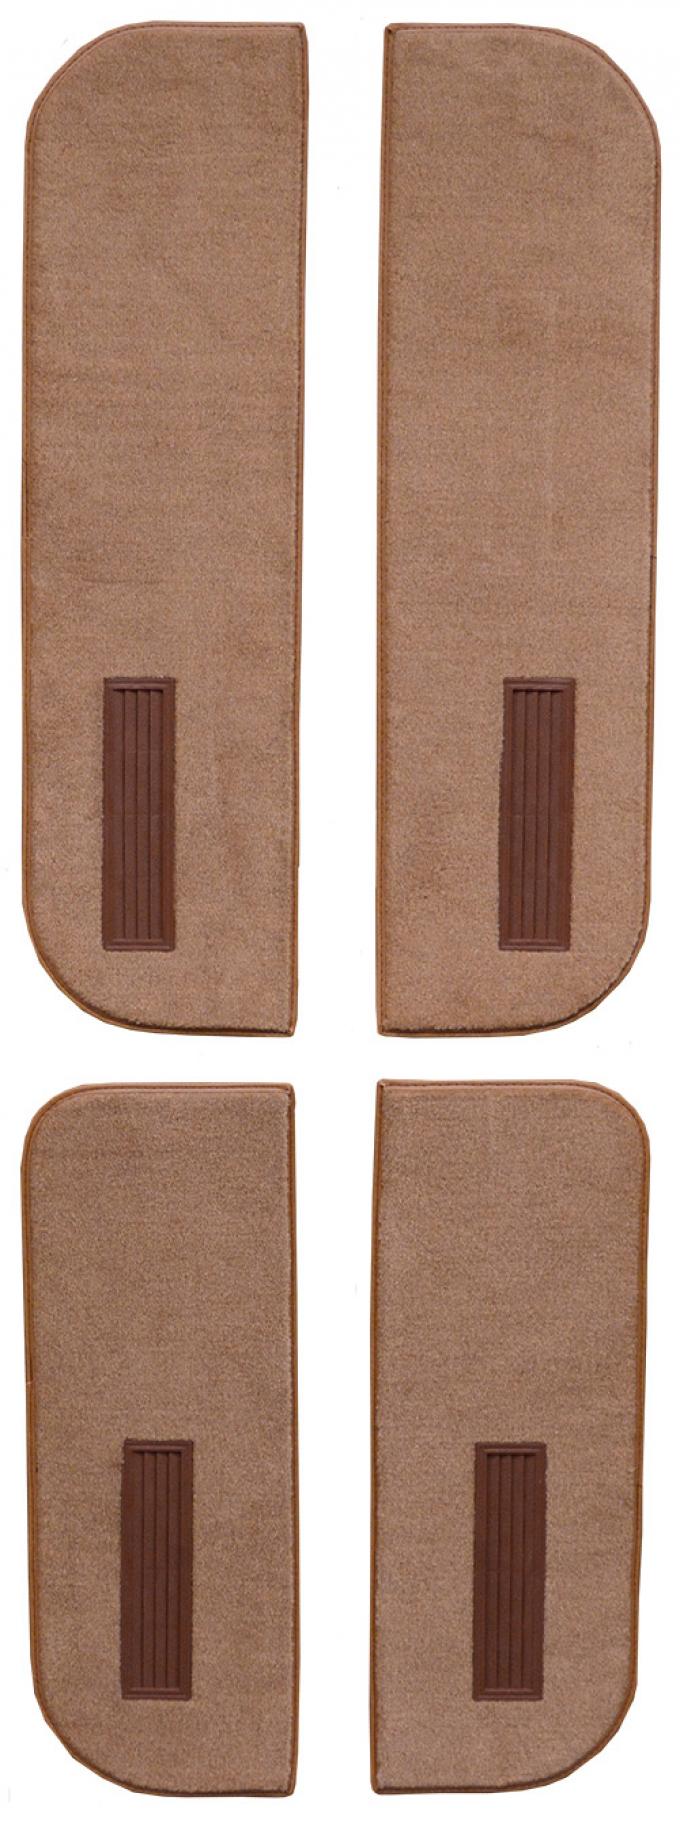 ACC 1973 Chevrolet C10 Suburban Door Panel Inserts on Cardboard w/Vents 4pc Loop Carpet